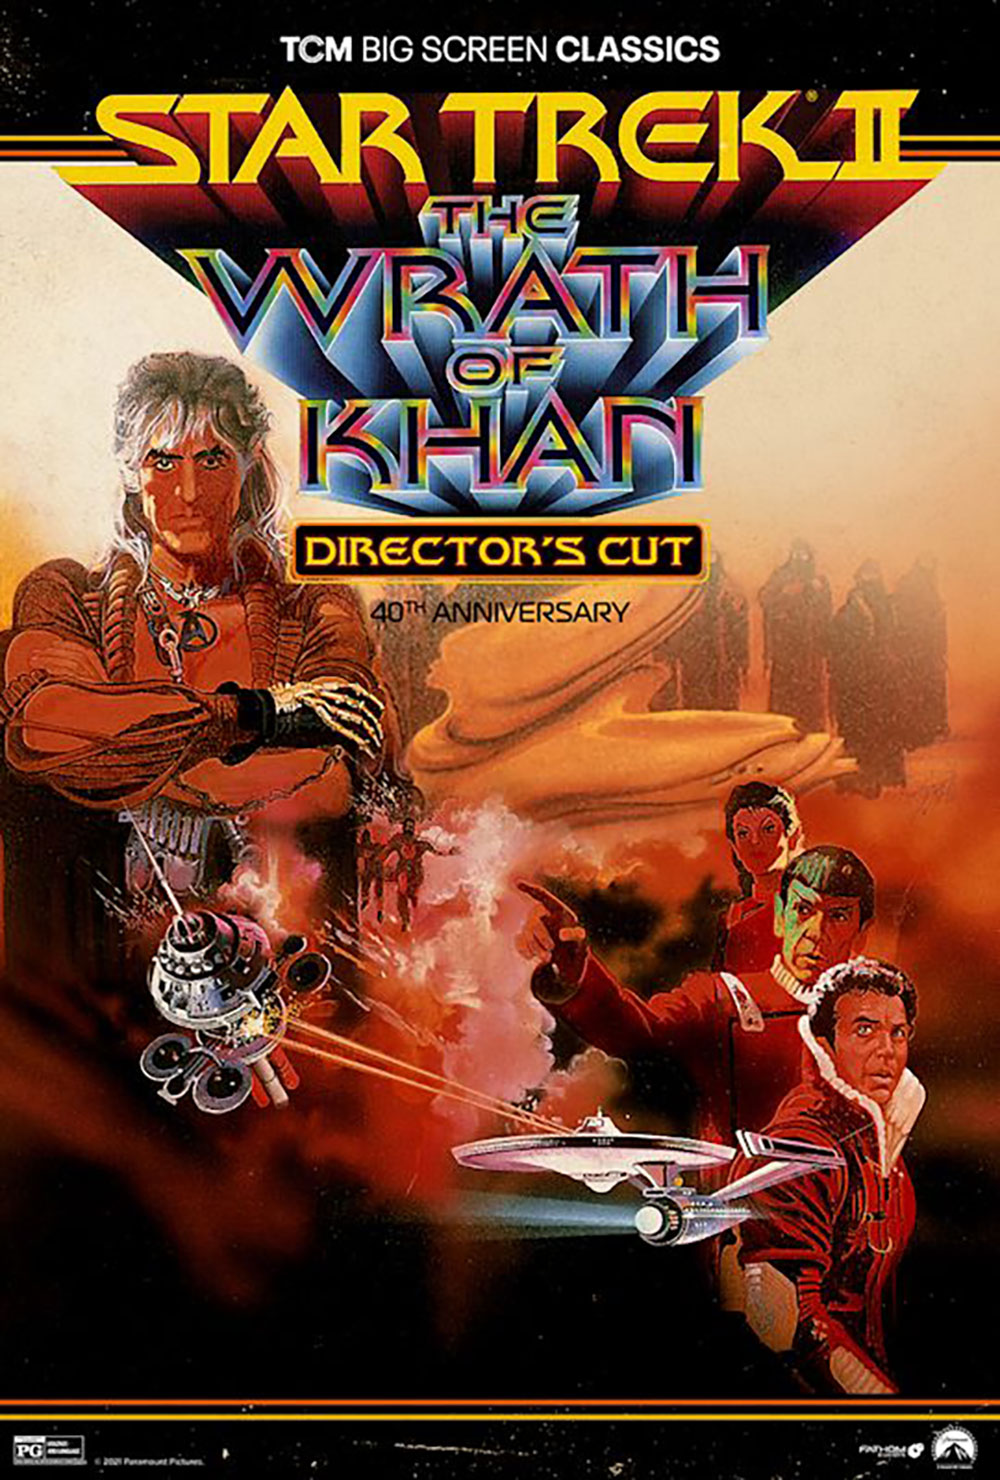 Star Trek II: The Wrath of Khan 40th anniversary poster